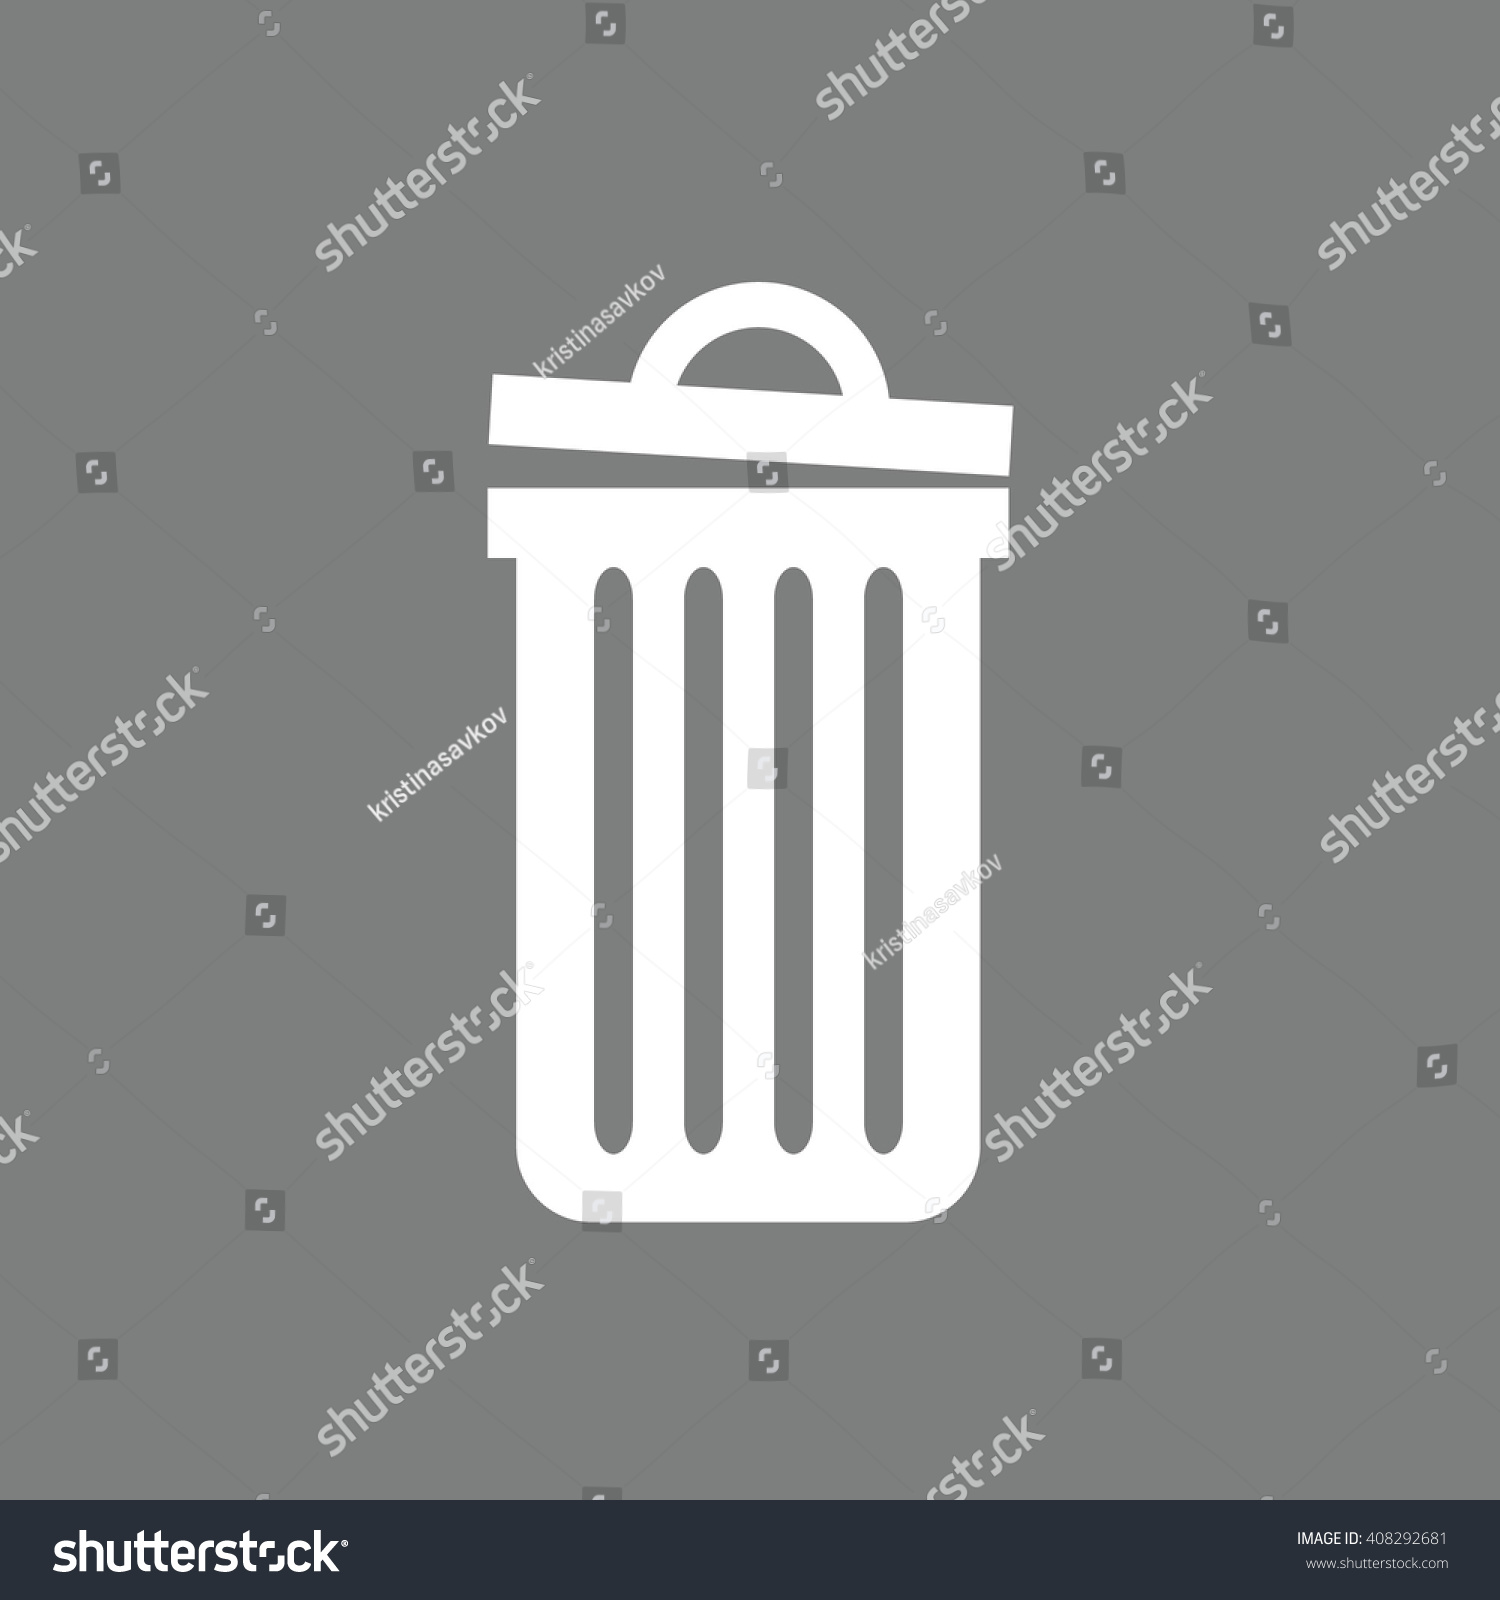 Bin, delete, empty, full, garbage, recycle, recycle bin, remove 